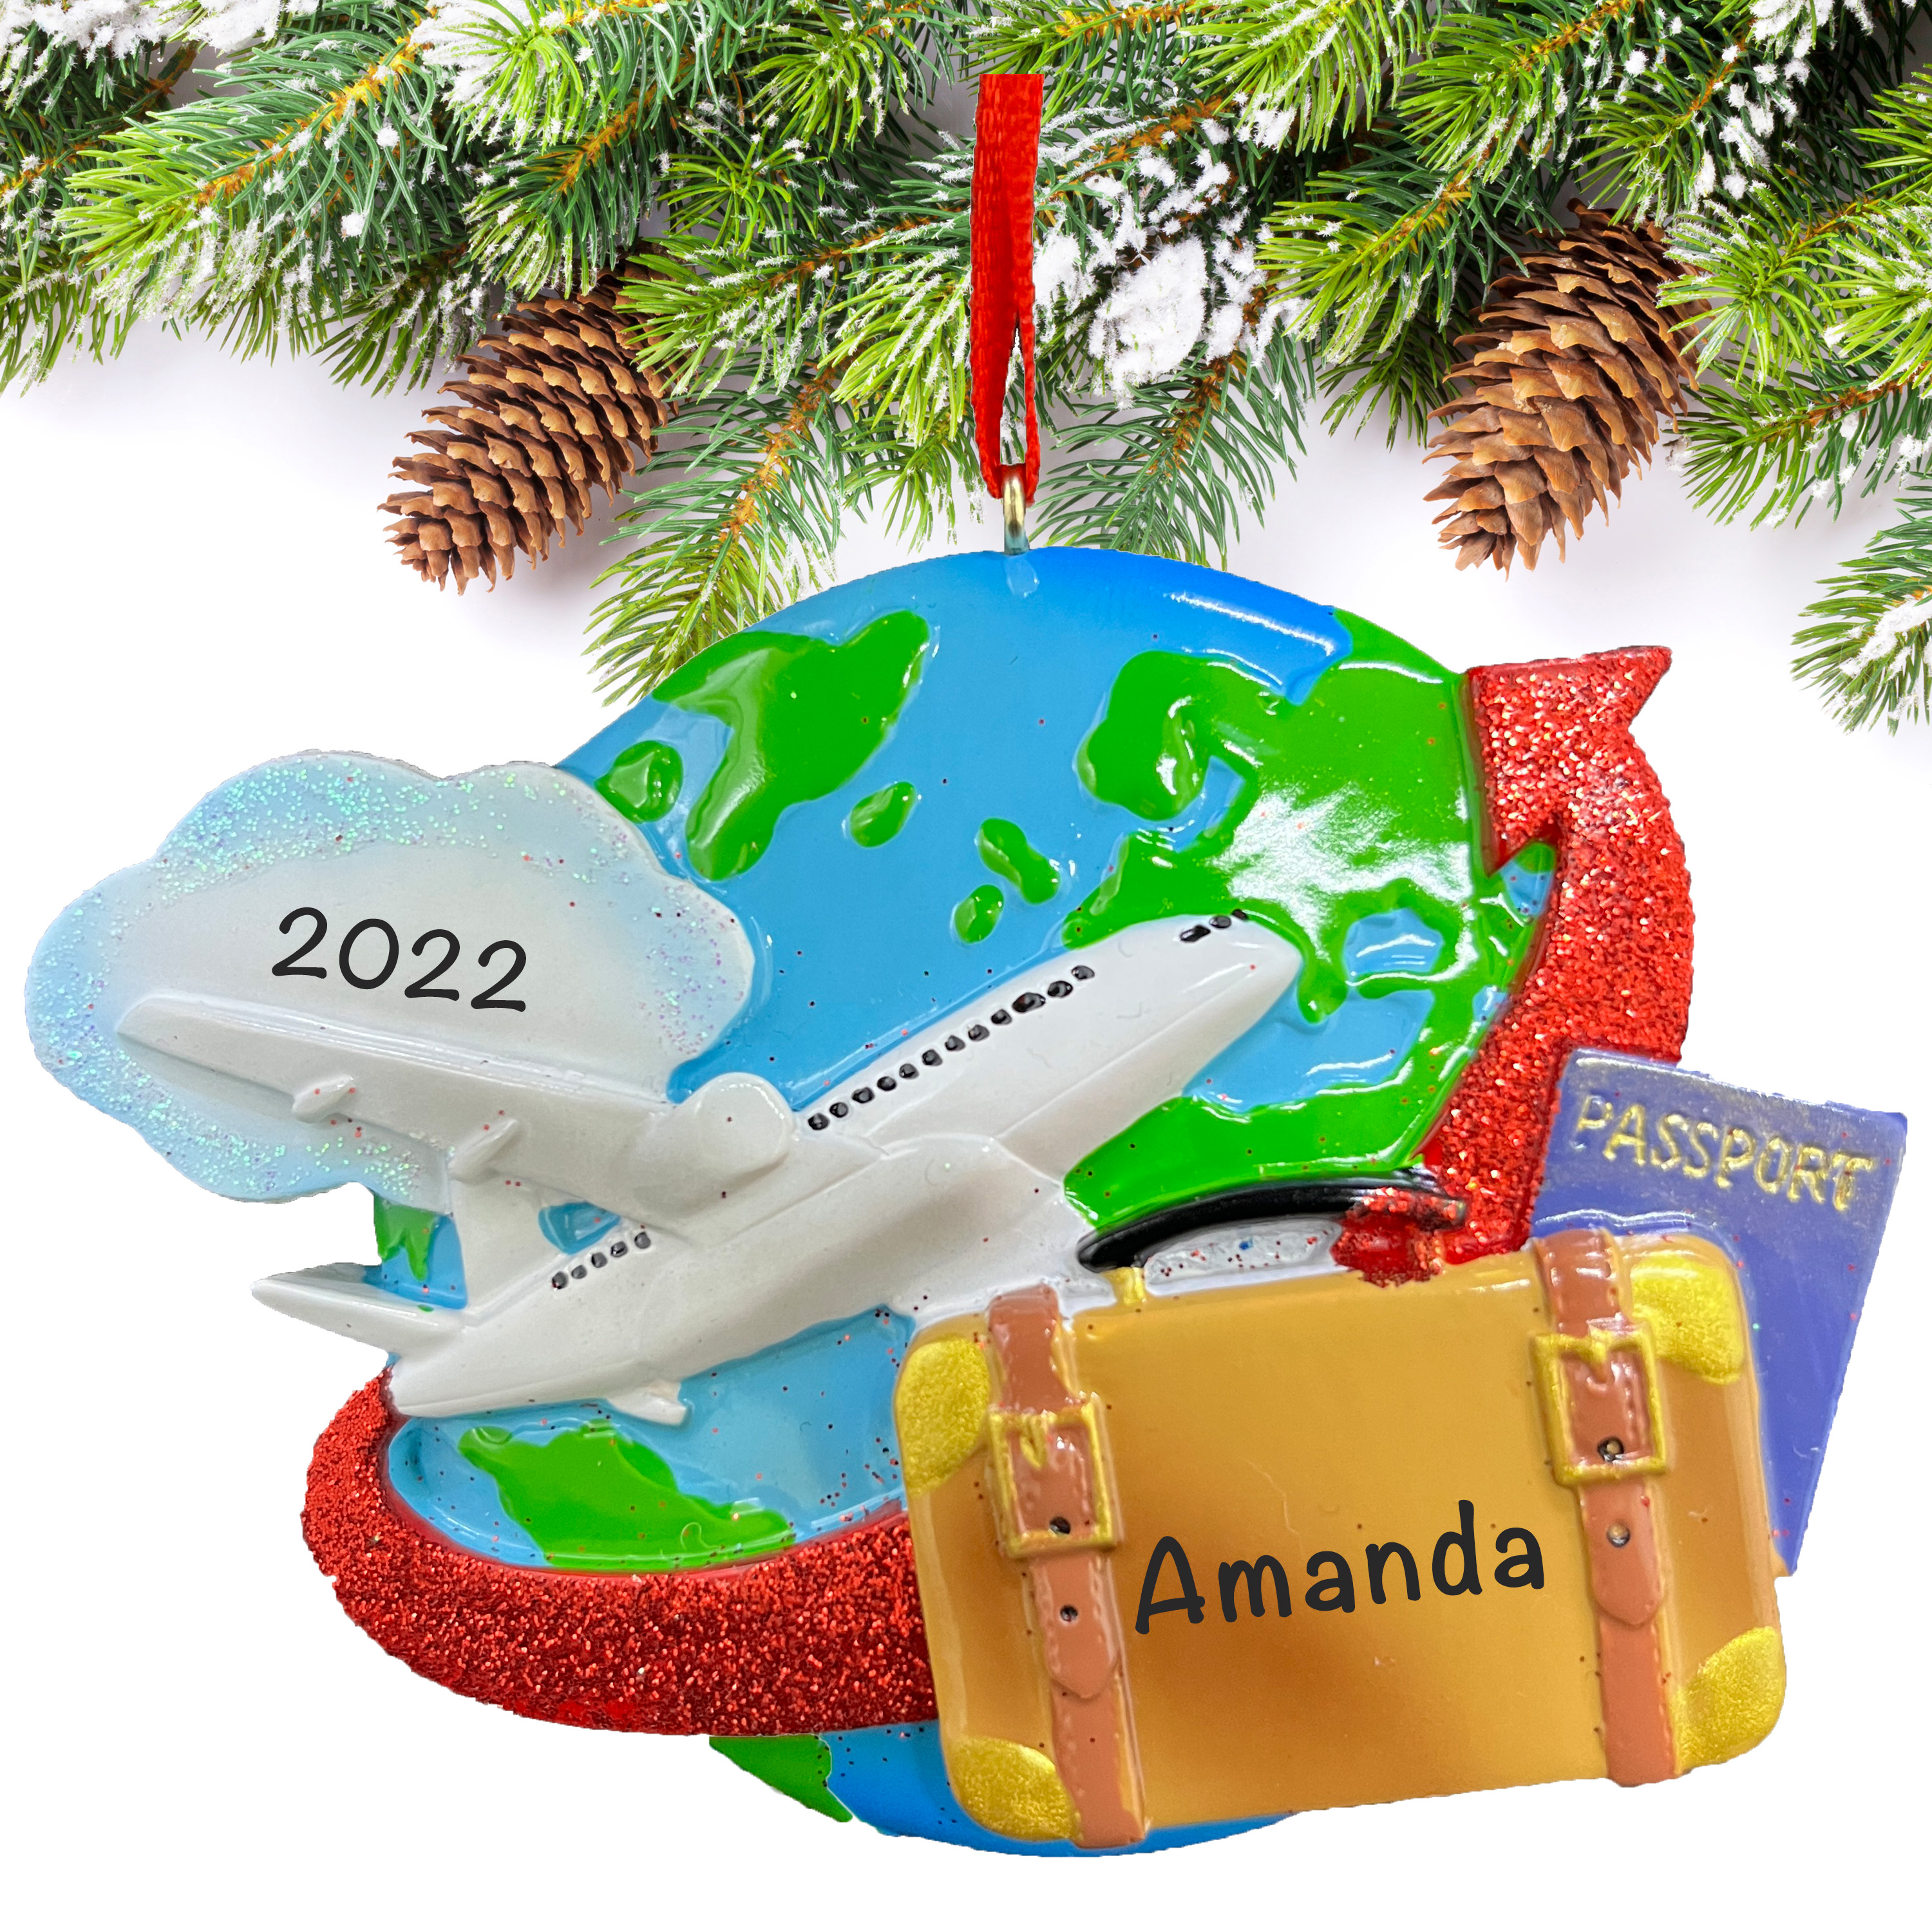 Travel Christmas ornament